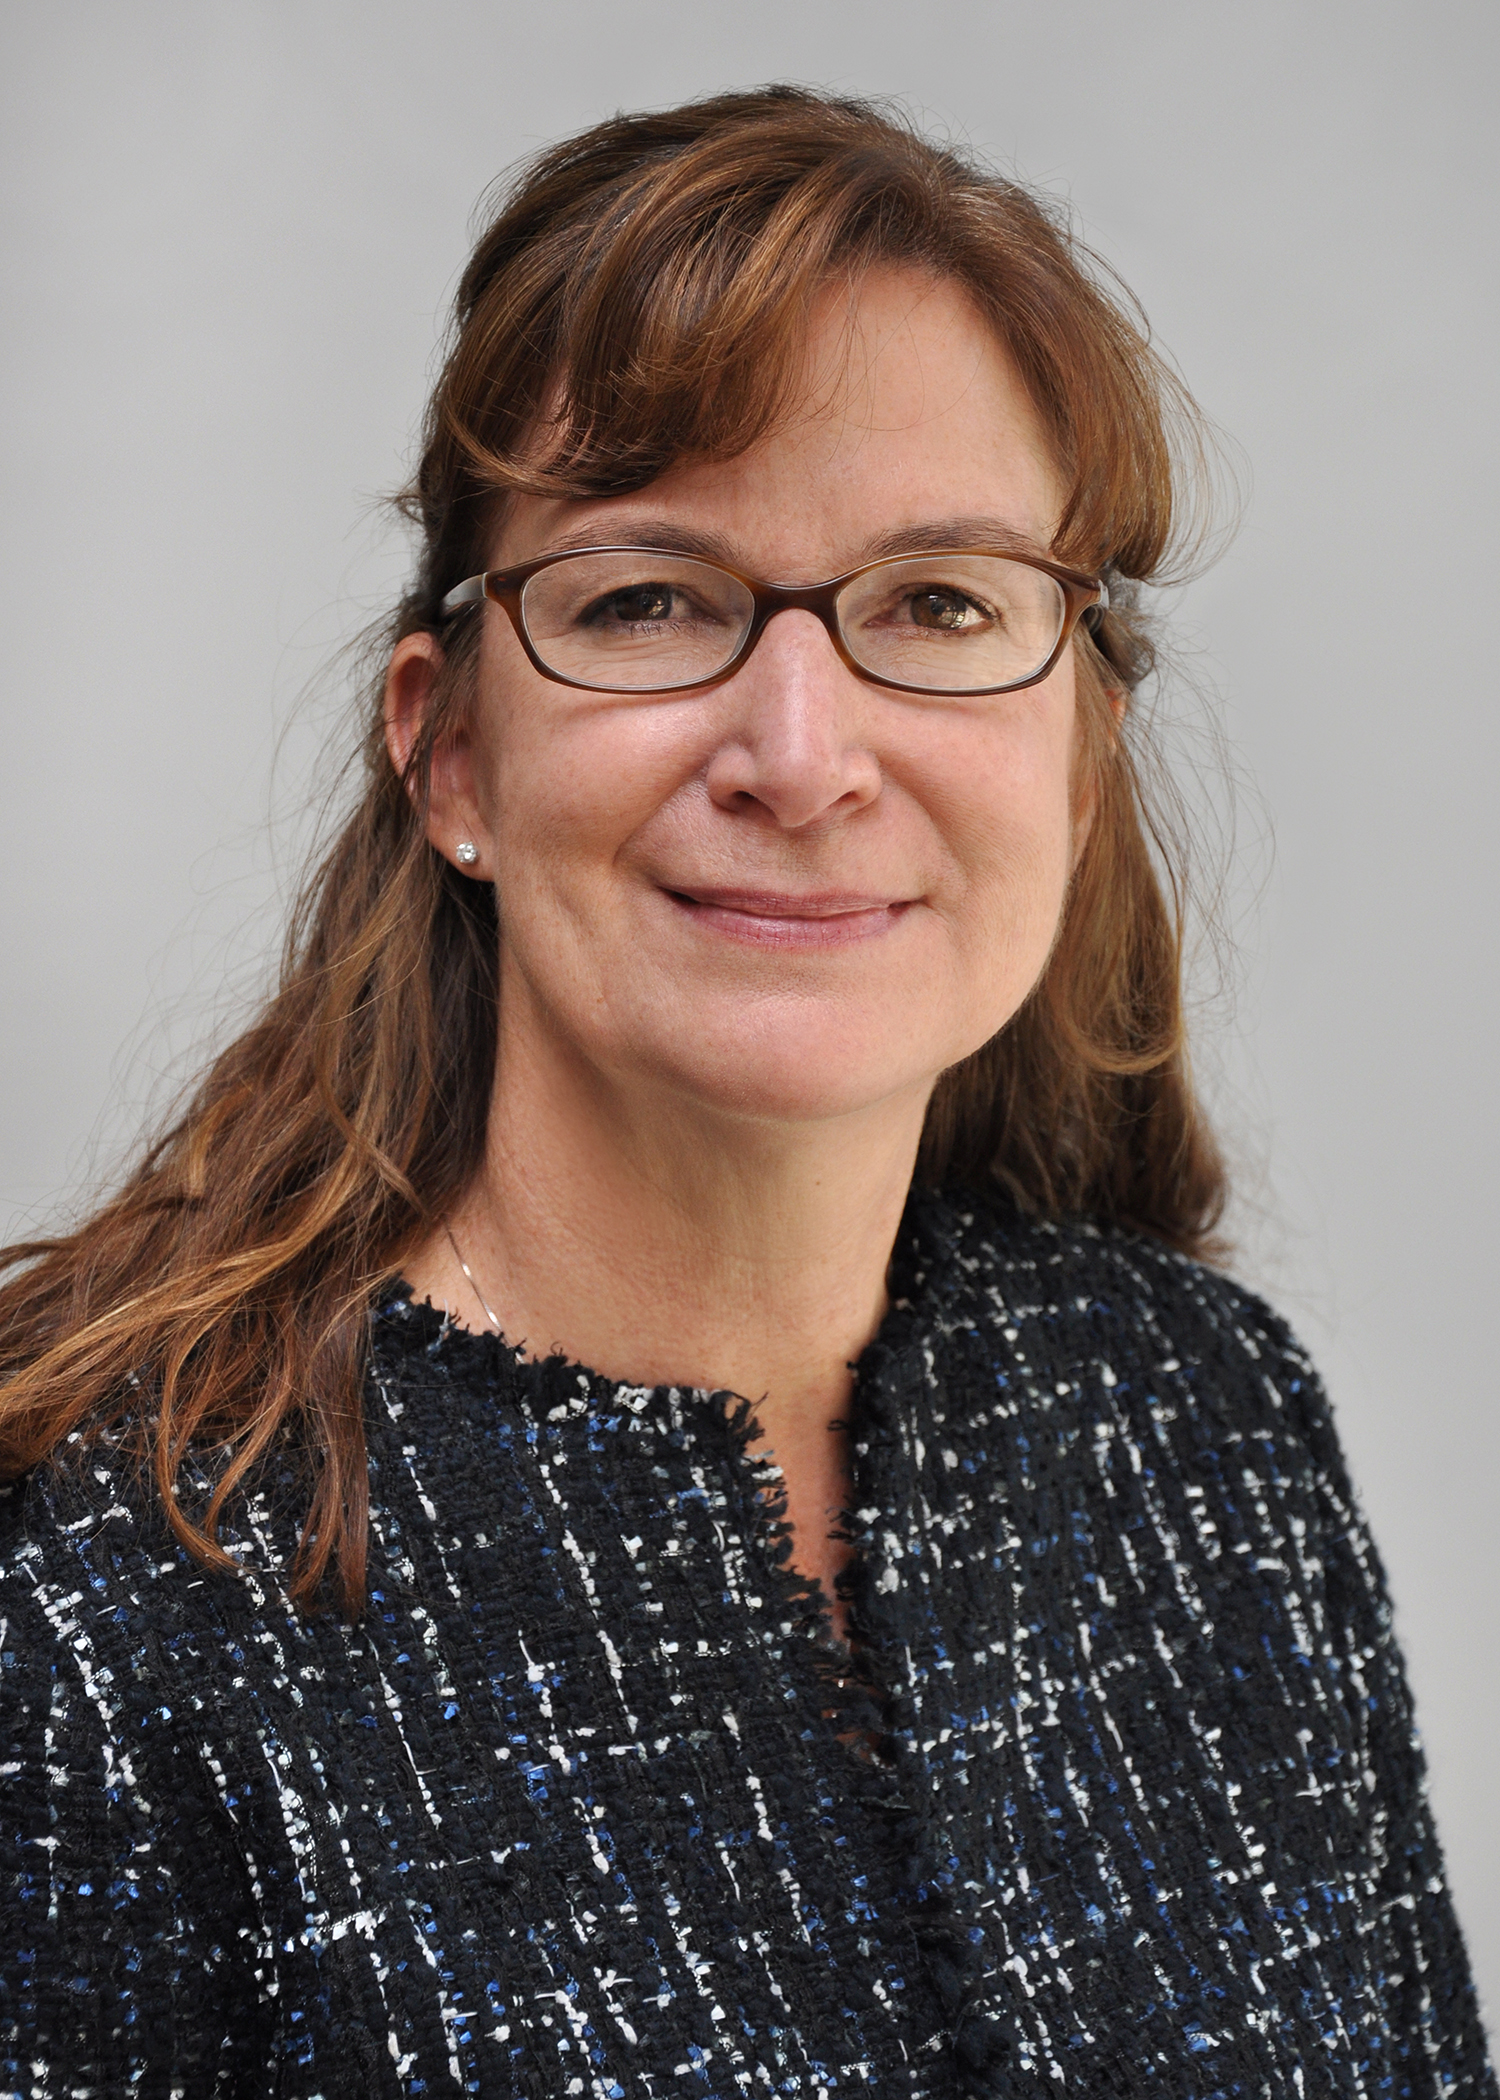 Jennifer Richer, PhD